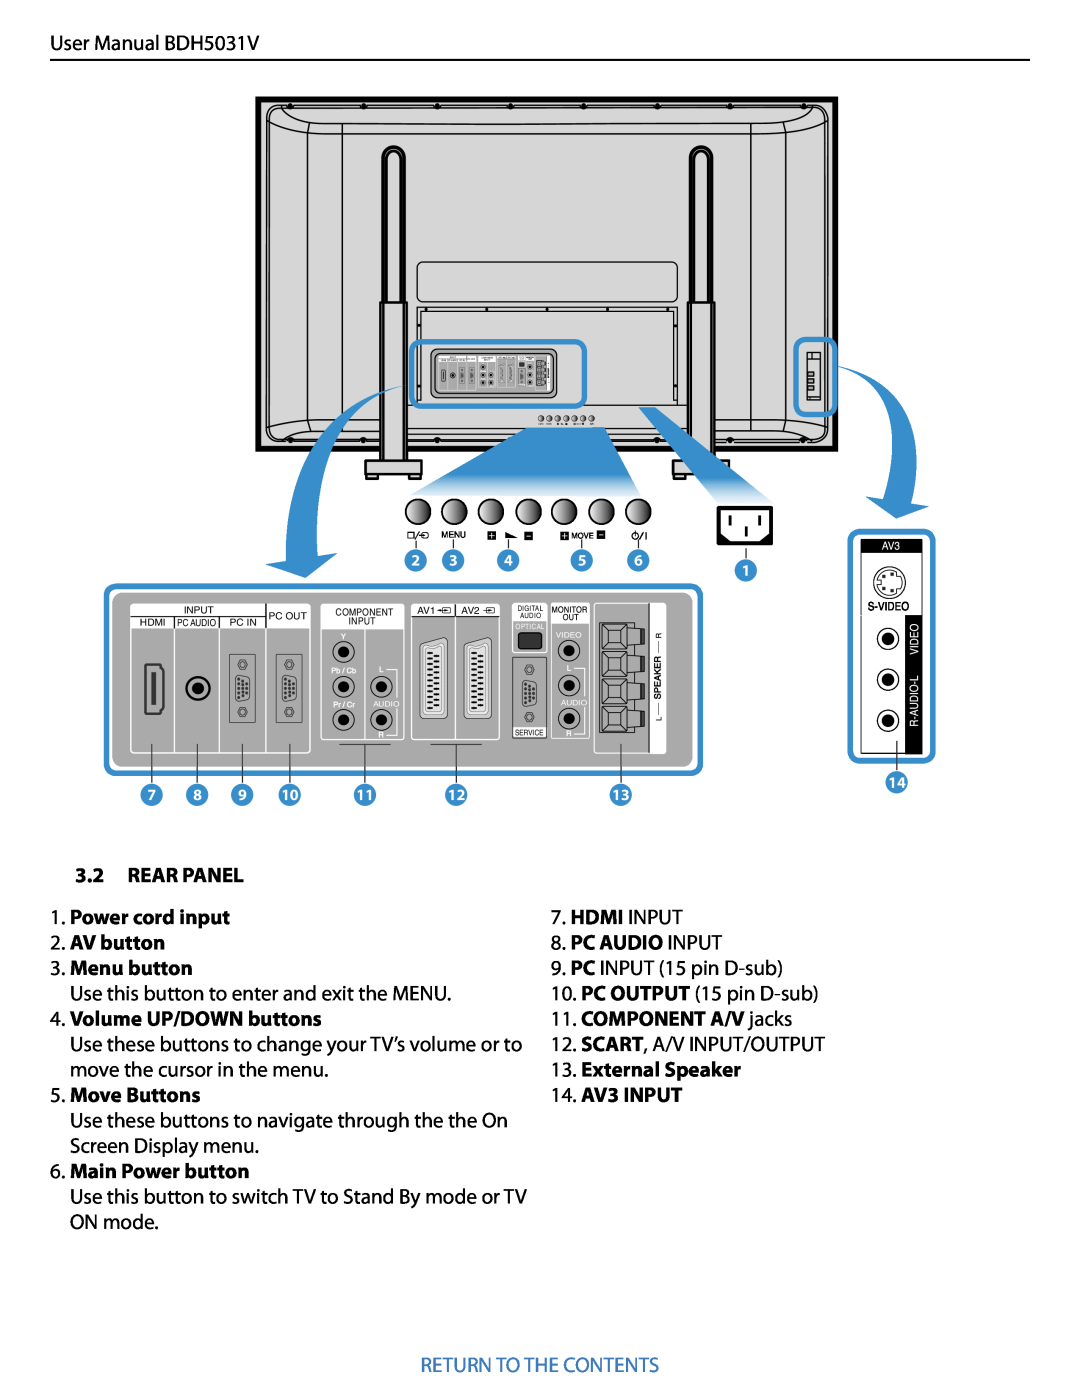 Philips BDH5031V.00 Rear Panel, Power cord input, AV button, Pc Audio Input, Menu button, Volume UP/DOWN buttons 